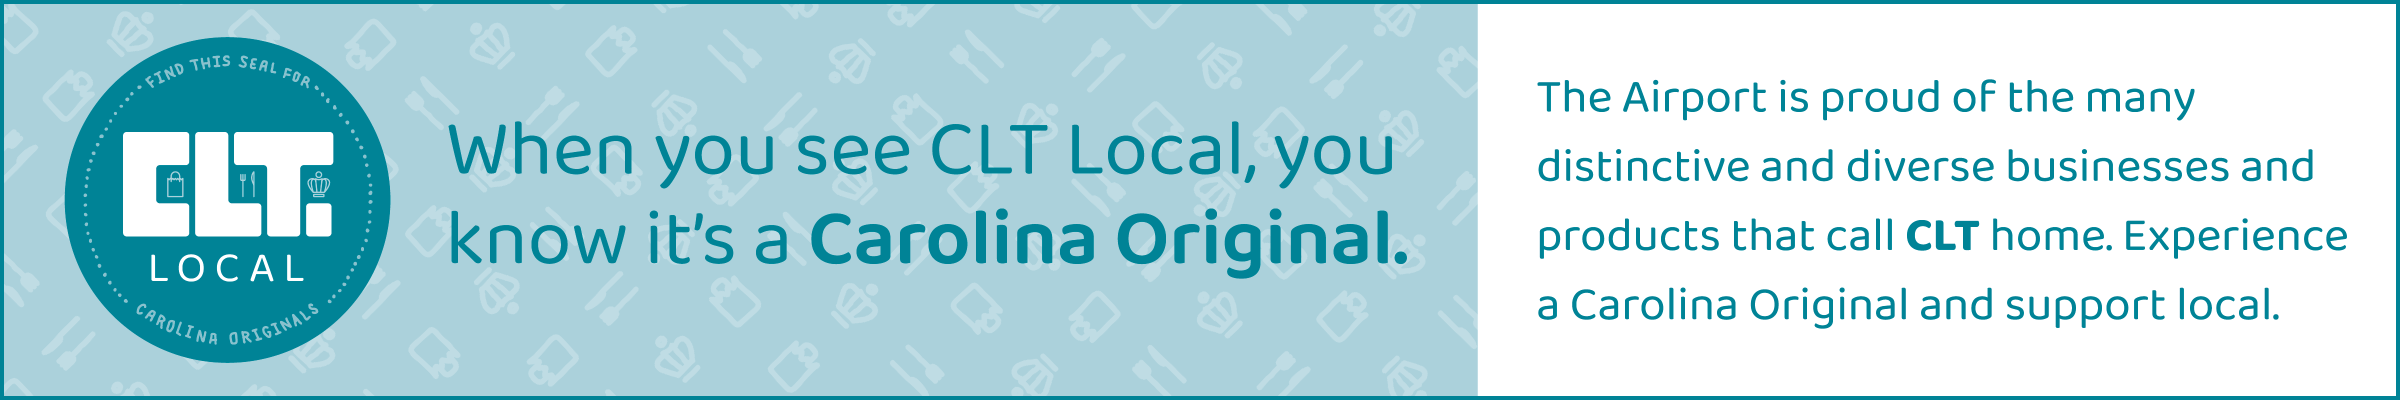 CLT Local - Banner